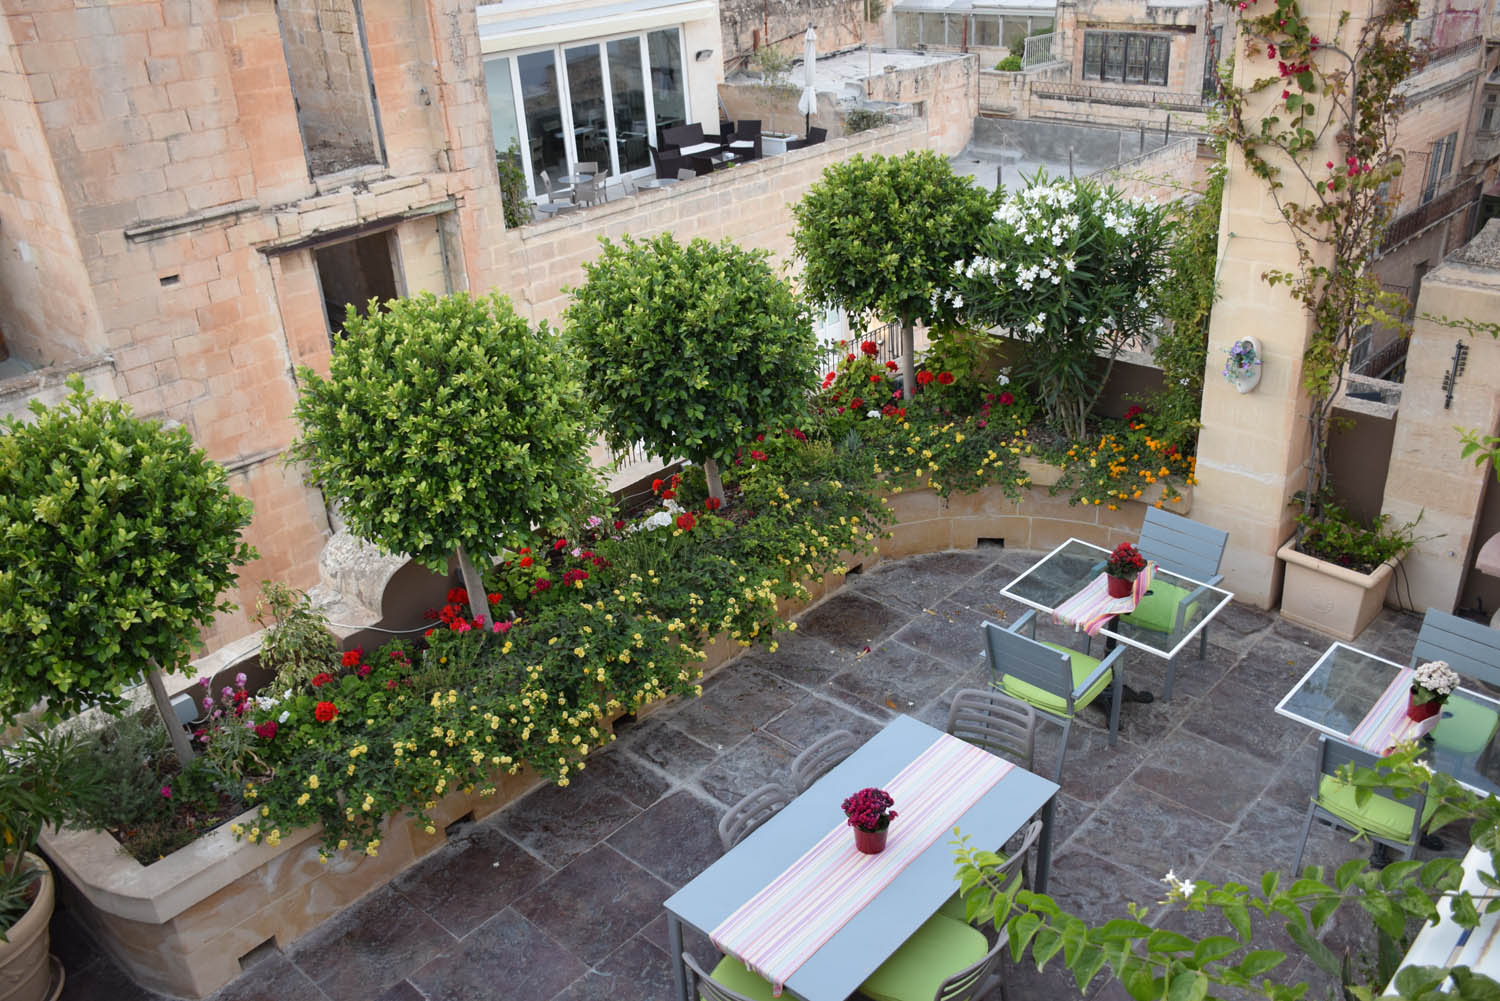 Mesinhas para os hóspedes no rooftop | Hotel Palazzo Prince d'Orange - Valletta - Malta